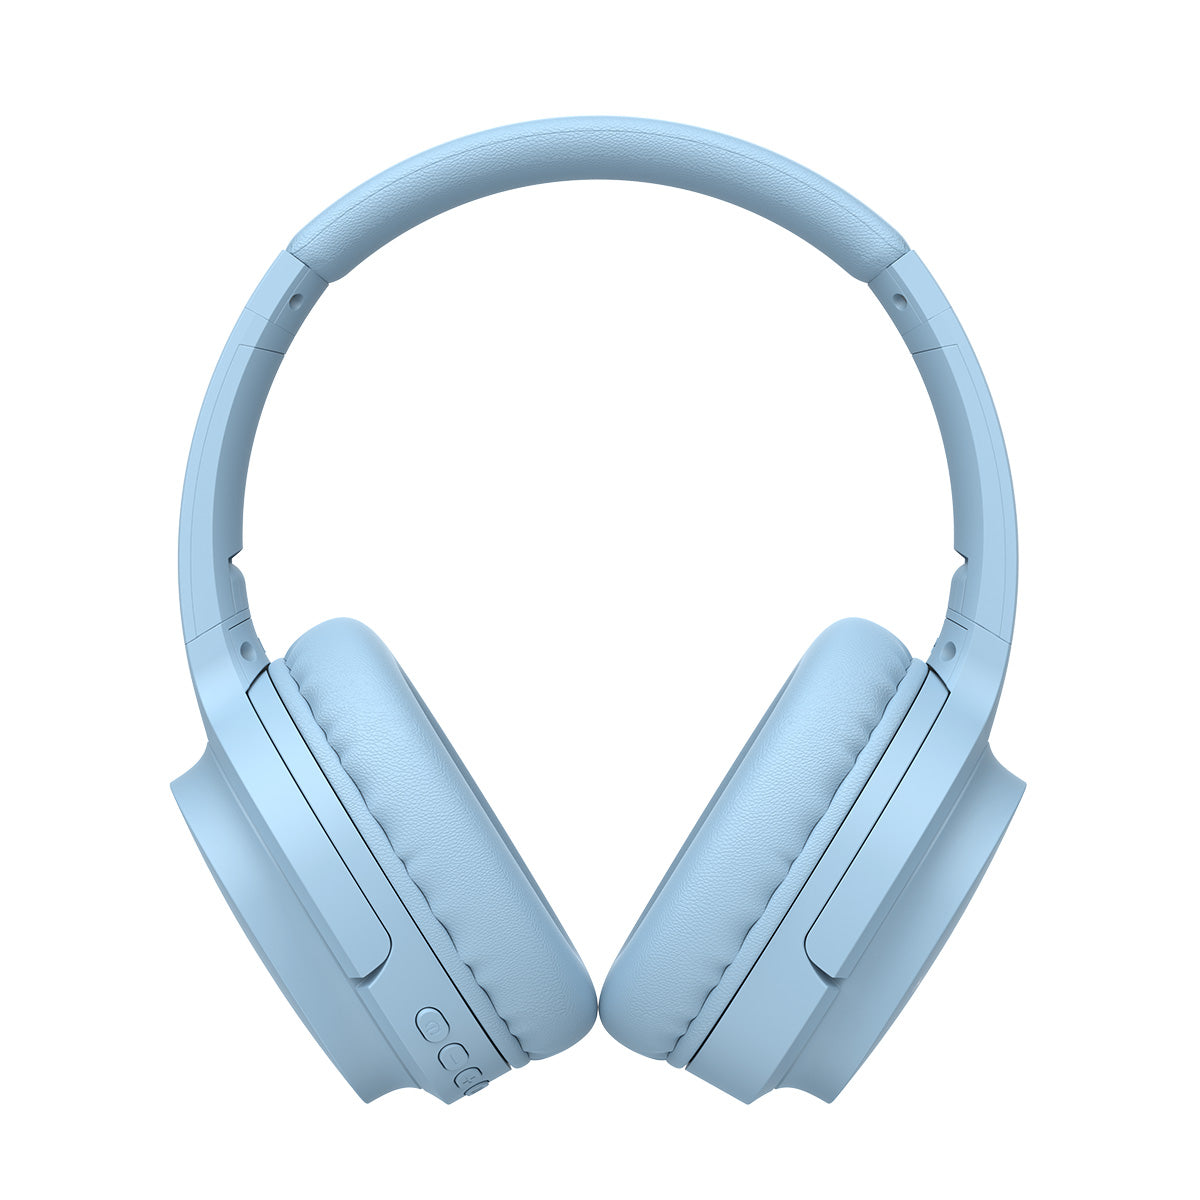 HAVIT I62 HIFI Sound Wireless Headset - Blue